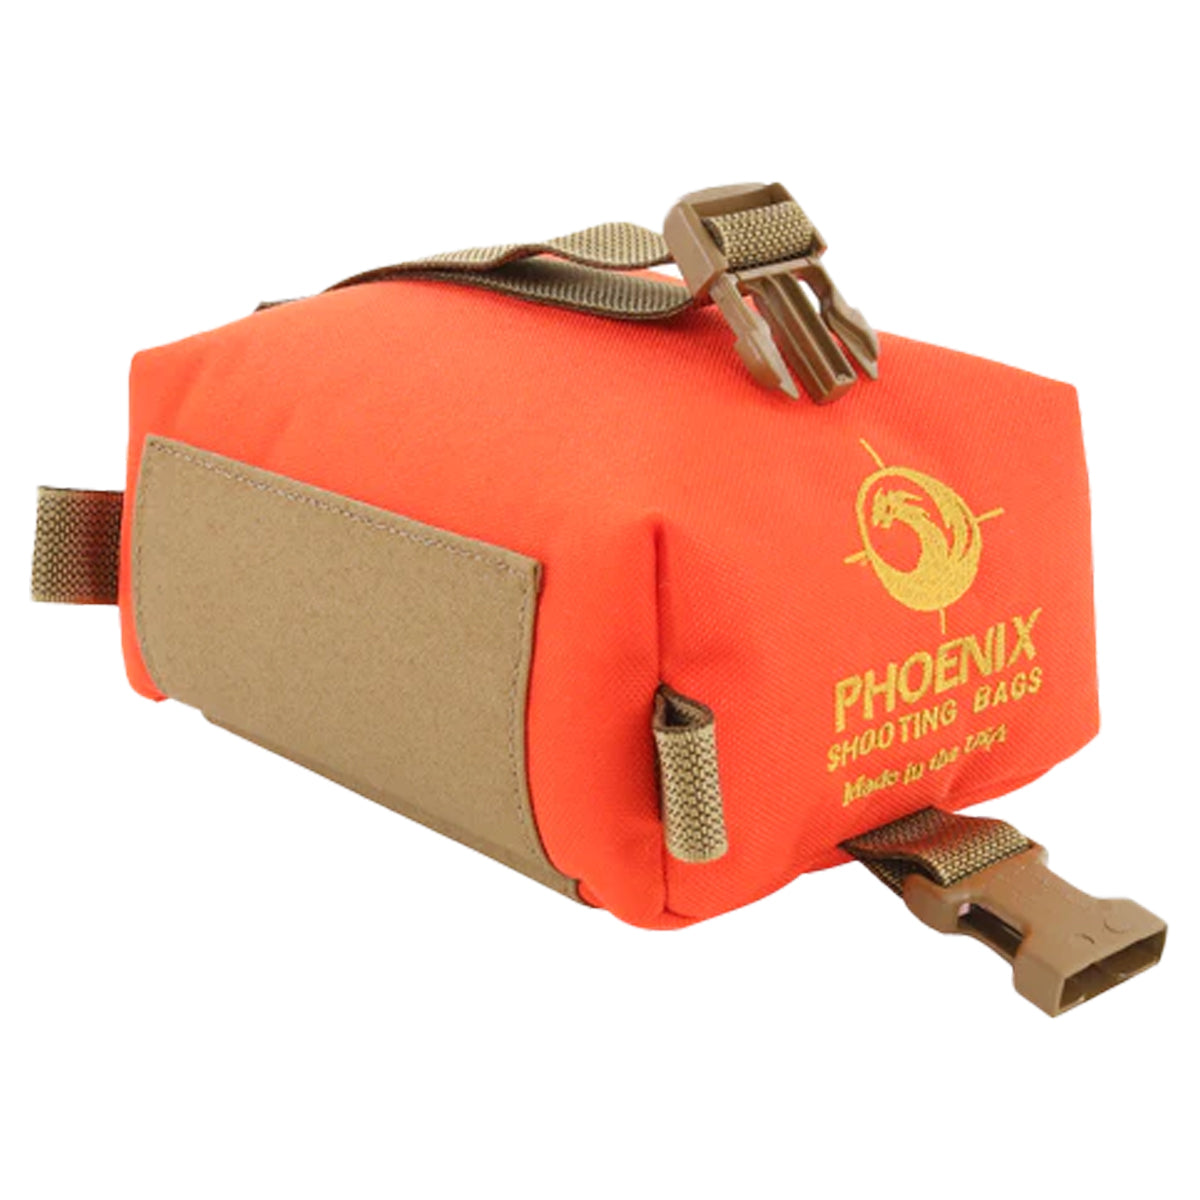 Phoenix Shooting Bags X-Small Rear Bag in Hunter Orange by GOHUNT | Phoenix Shooting Bags - GOHUNT Shop